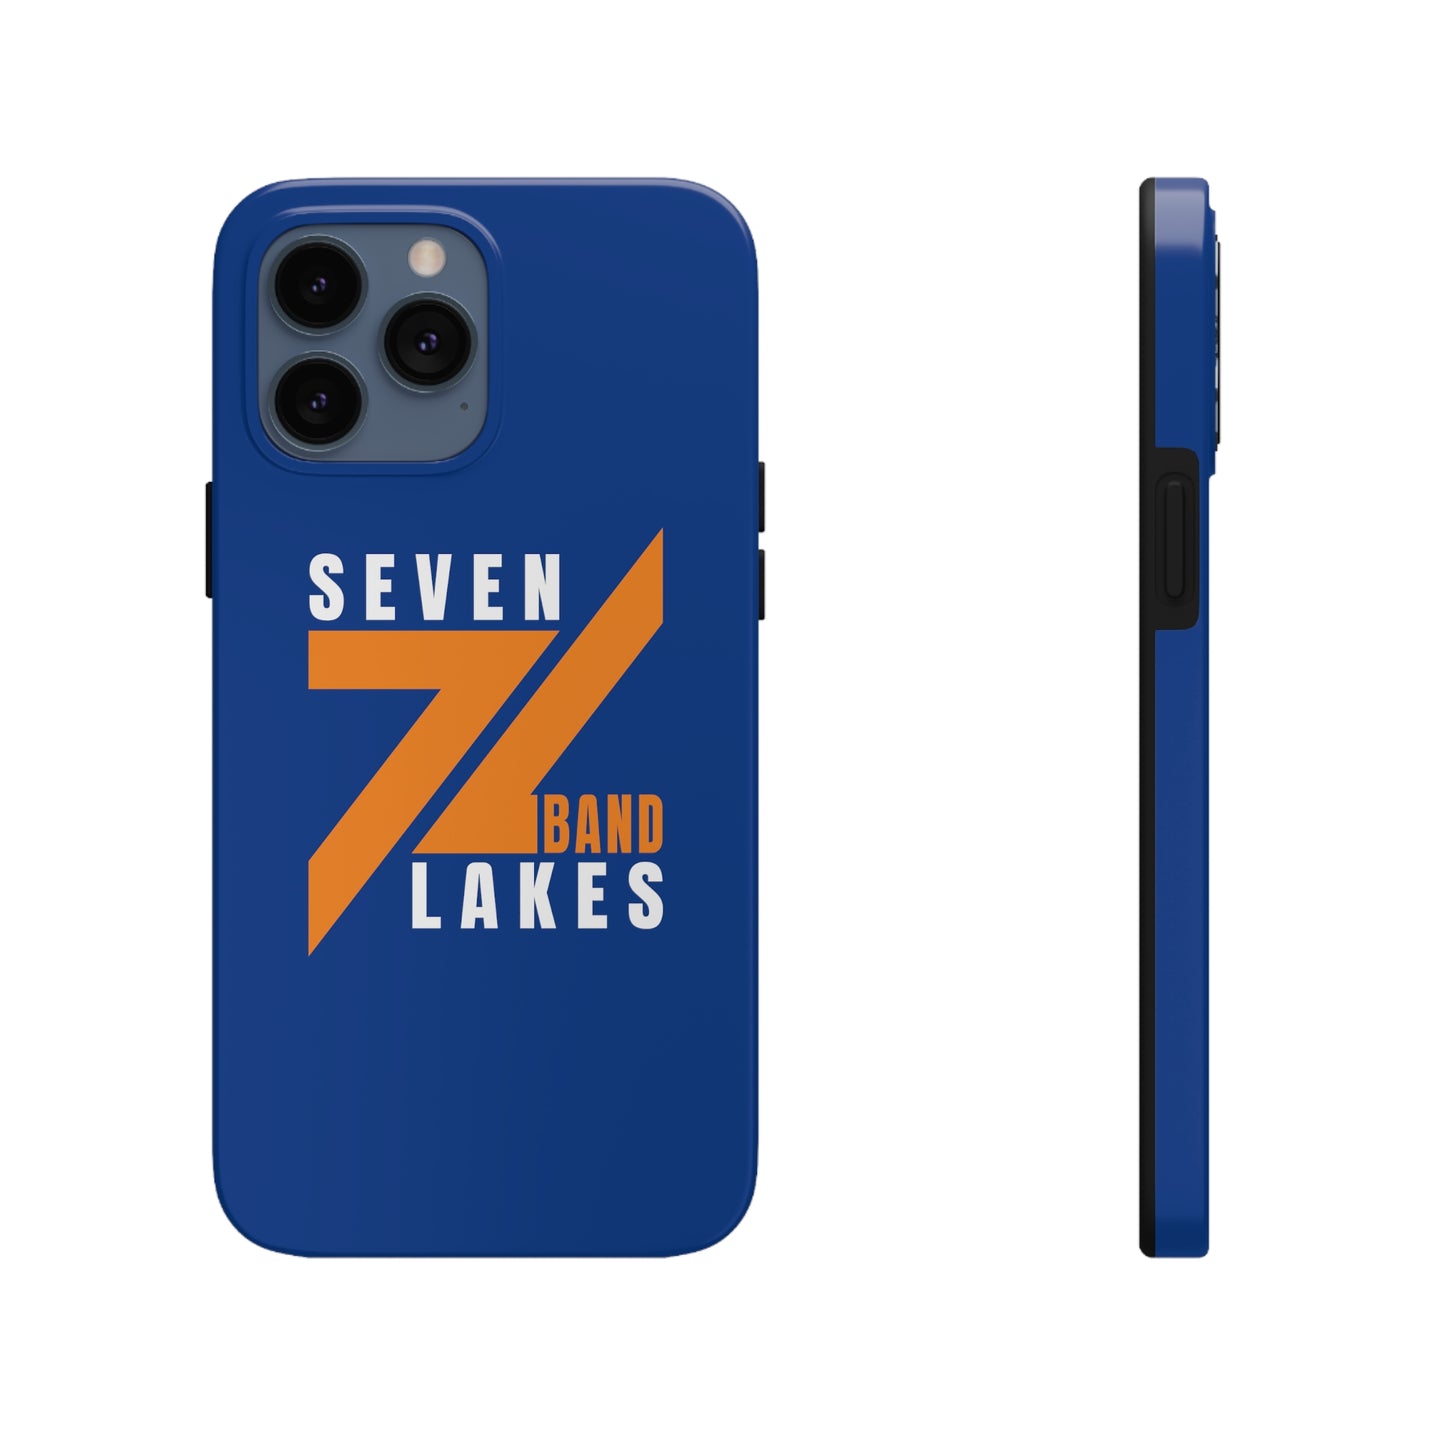 7L Band - iPhone Case - Blue